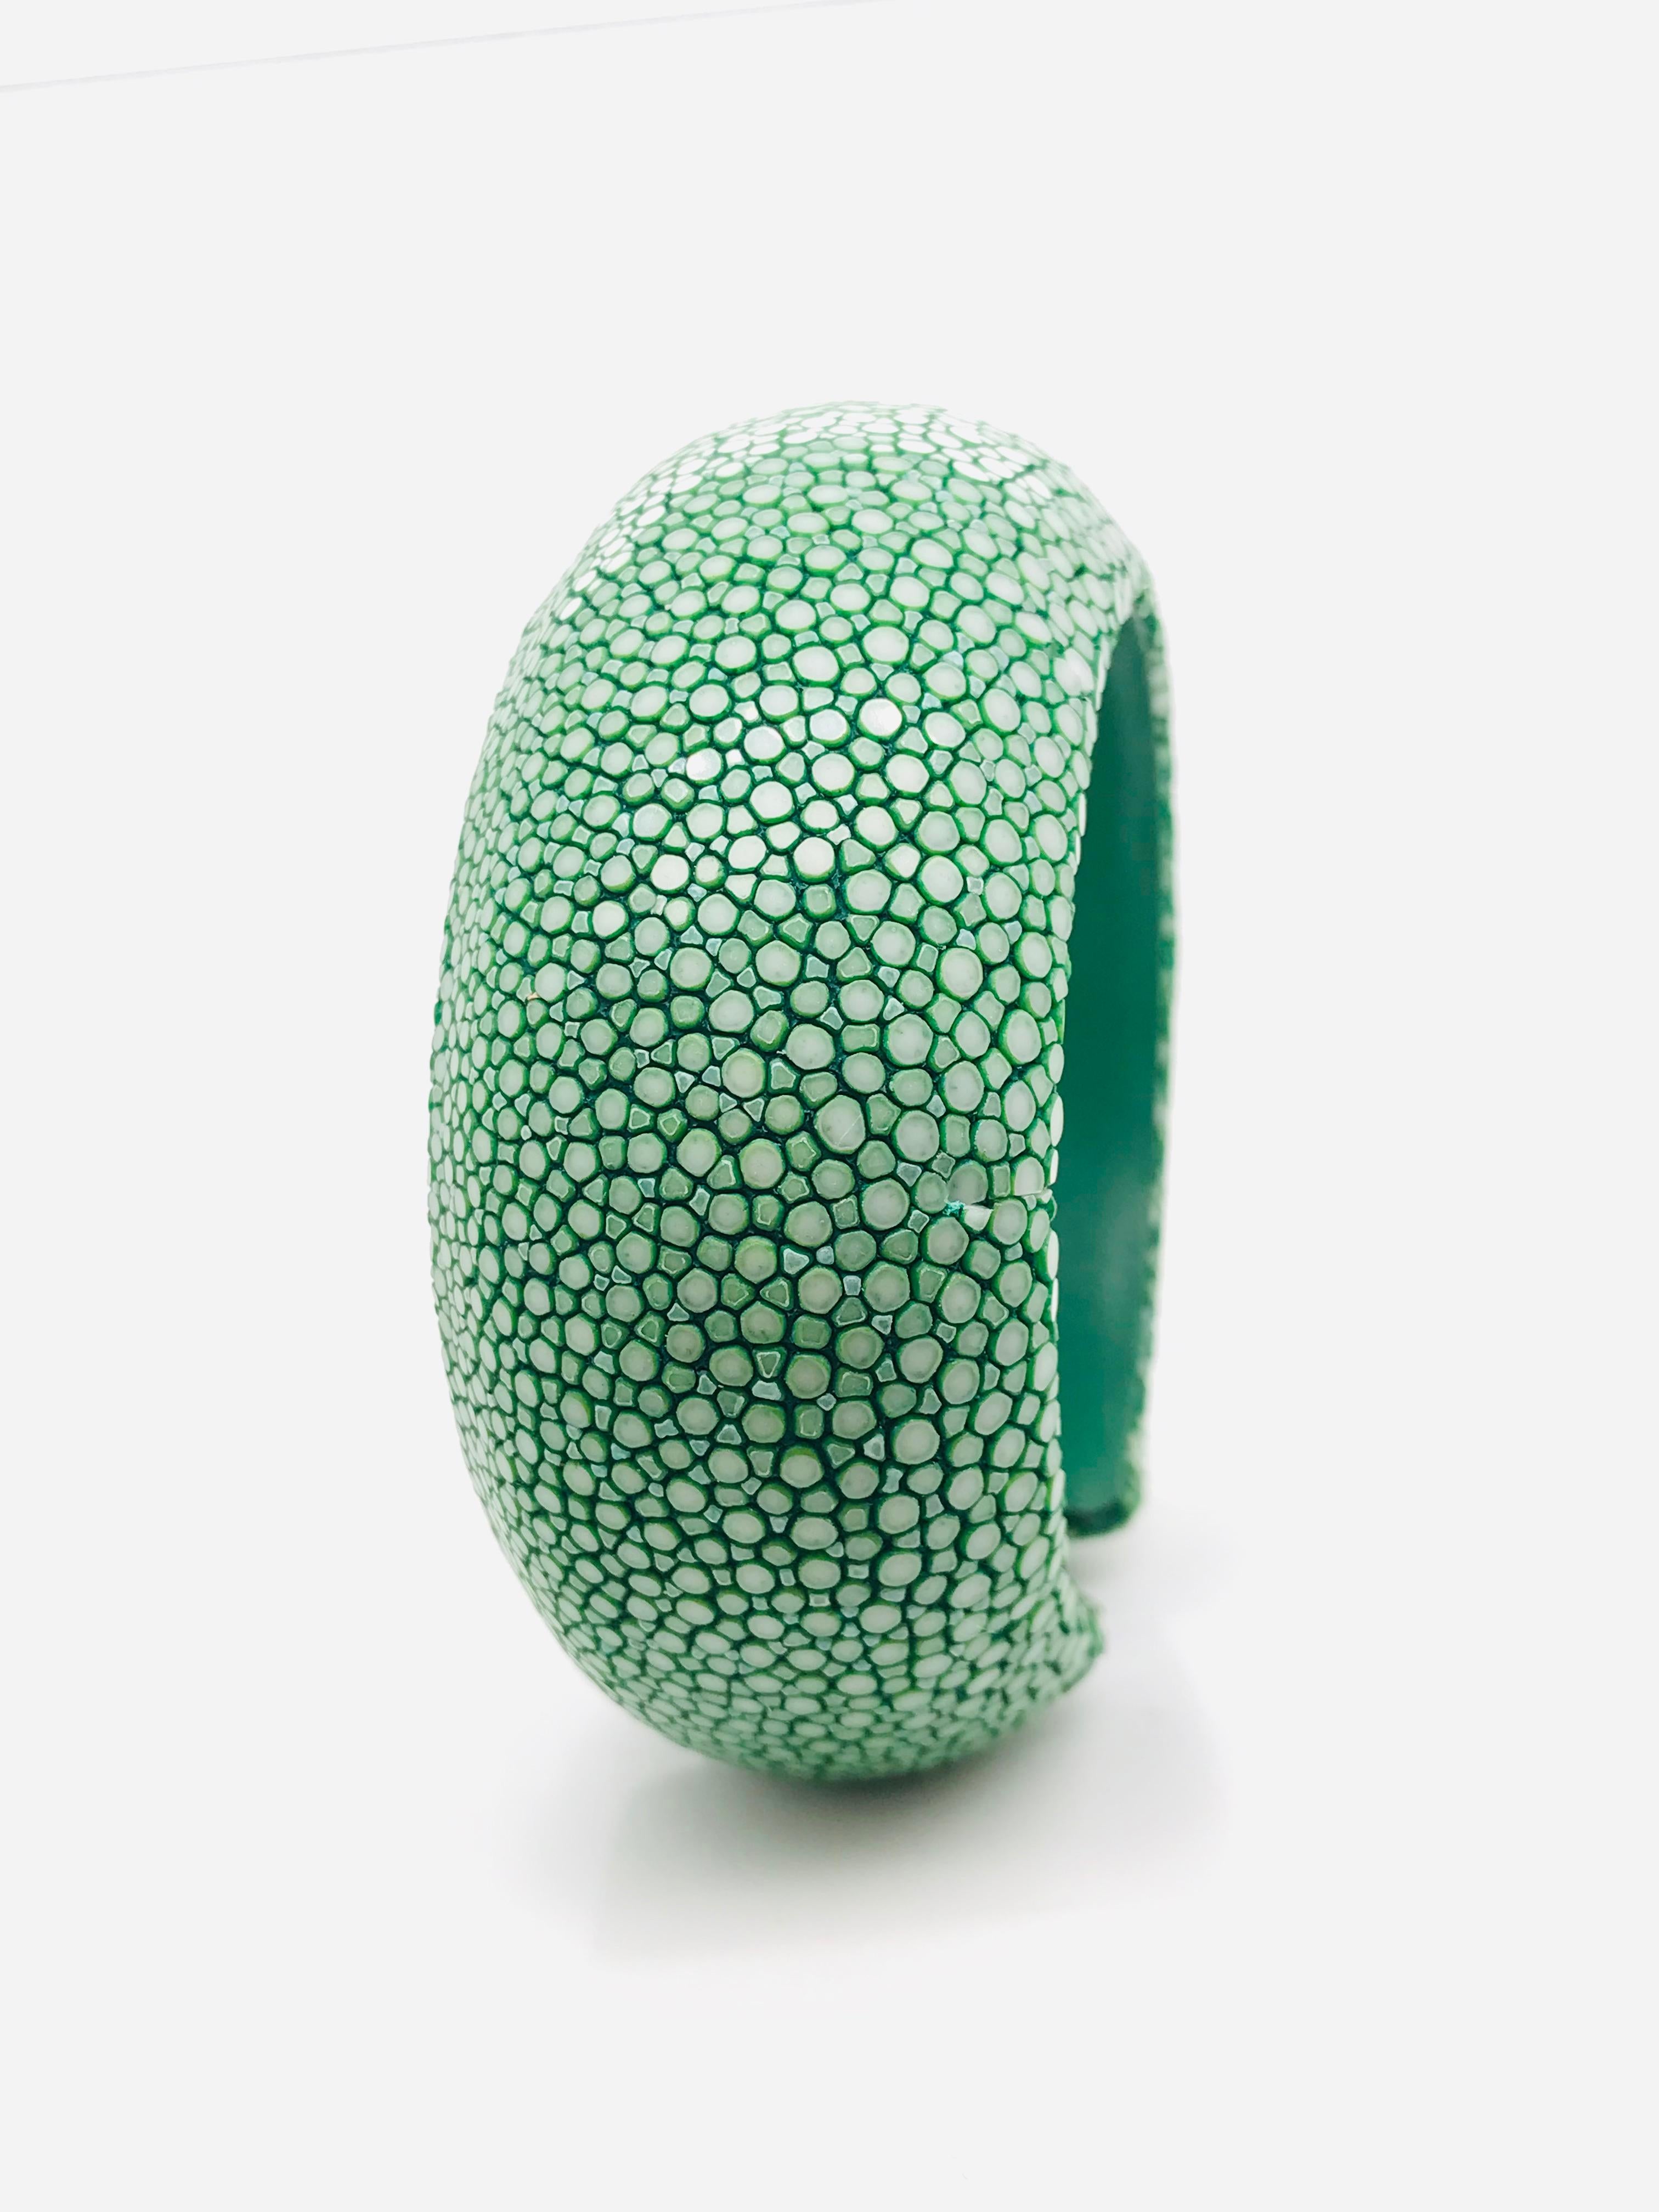 Discover this Green Galuchat Cuff Bracelet.
Green Galuchat Bracelet 
Width 5.3 cm 